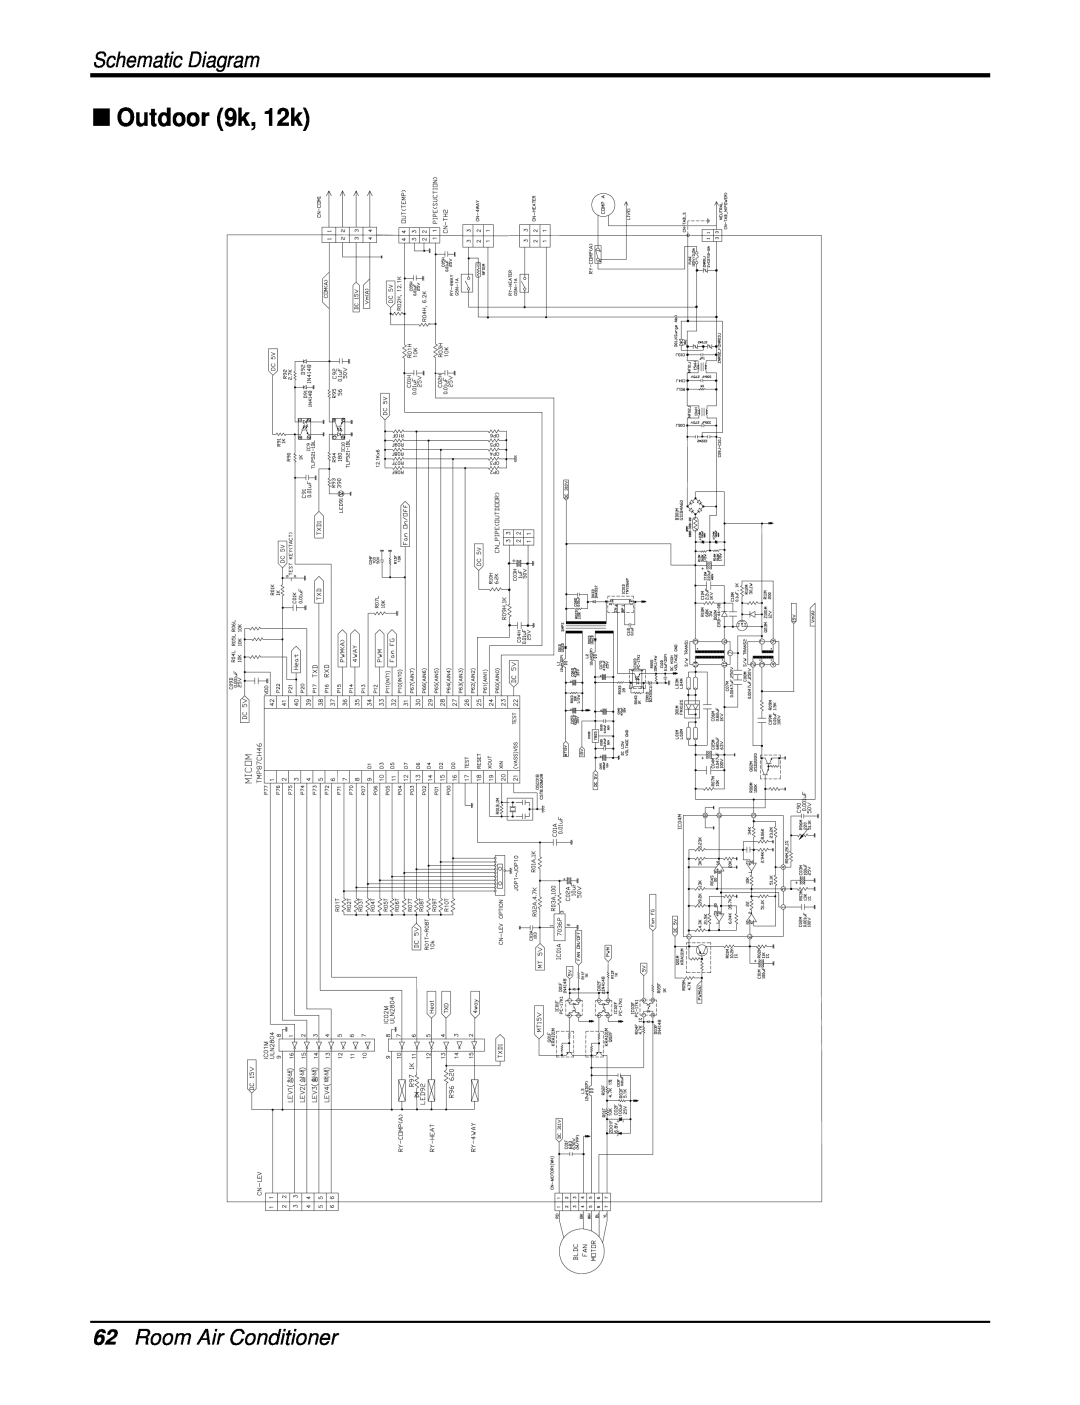 Heat Controller DMH18SB-1, DMC18SB-1, DMC12SB-0, DMC09SB-0 Outdoor 9k, 12k, 62Room Air Conditioner, Schematic Diagram 